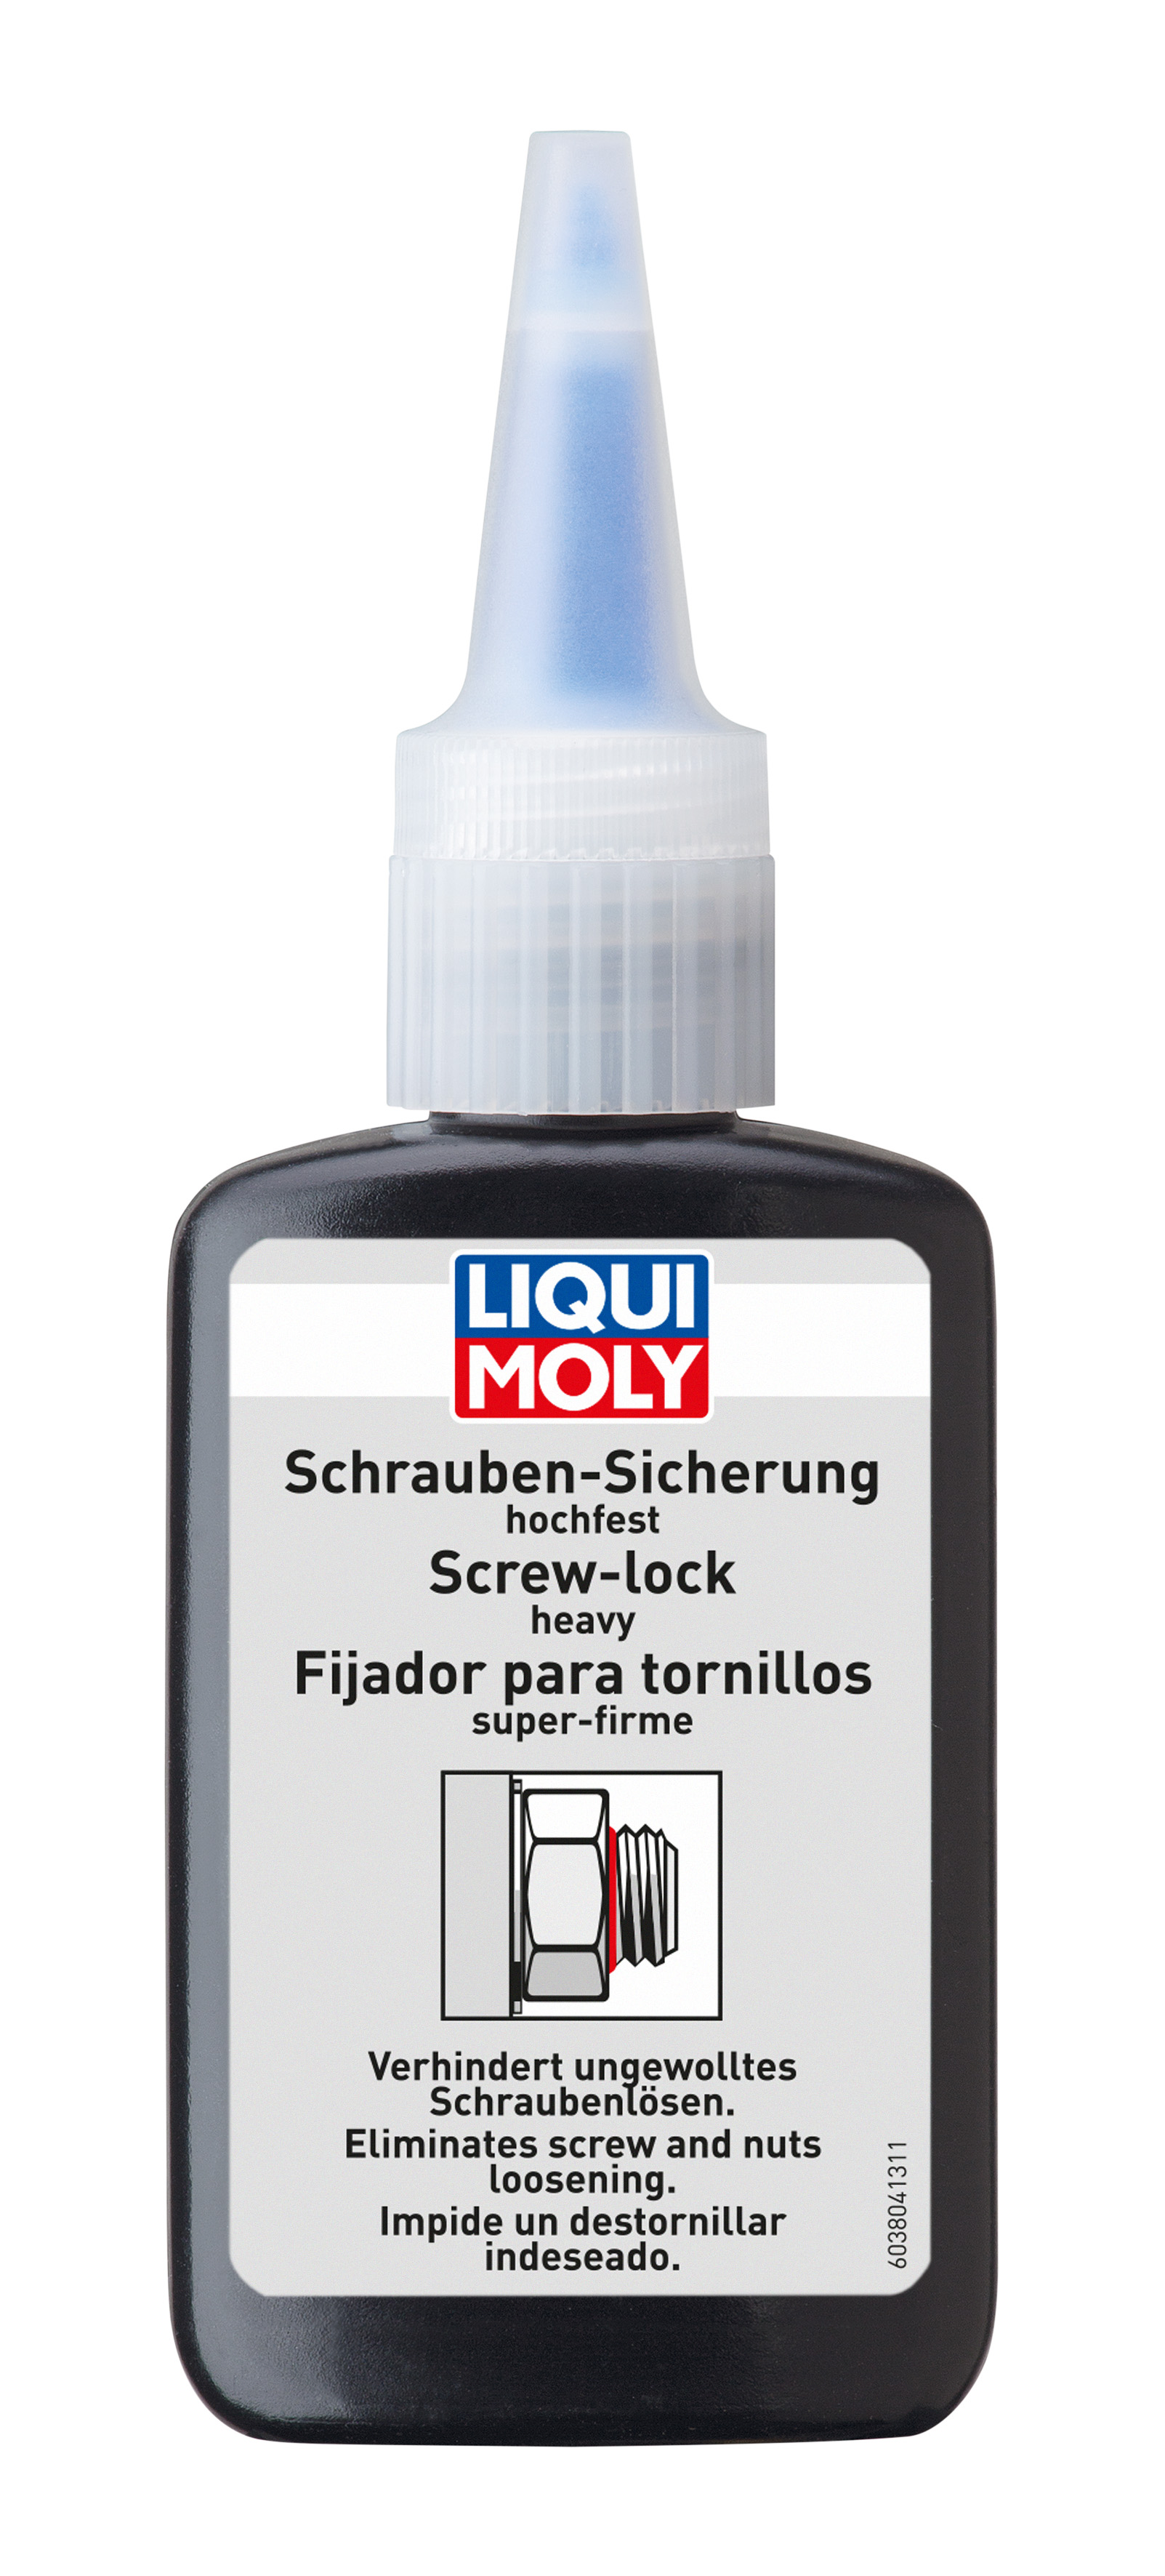 LIQUI MOLY Schrauben-Sicherung hochfest Средство для фиксации винтов (сильной фиксации)